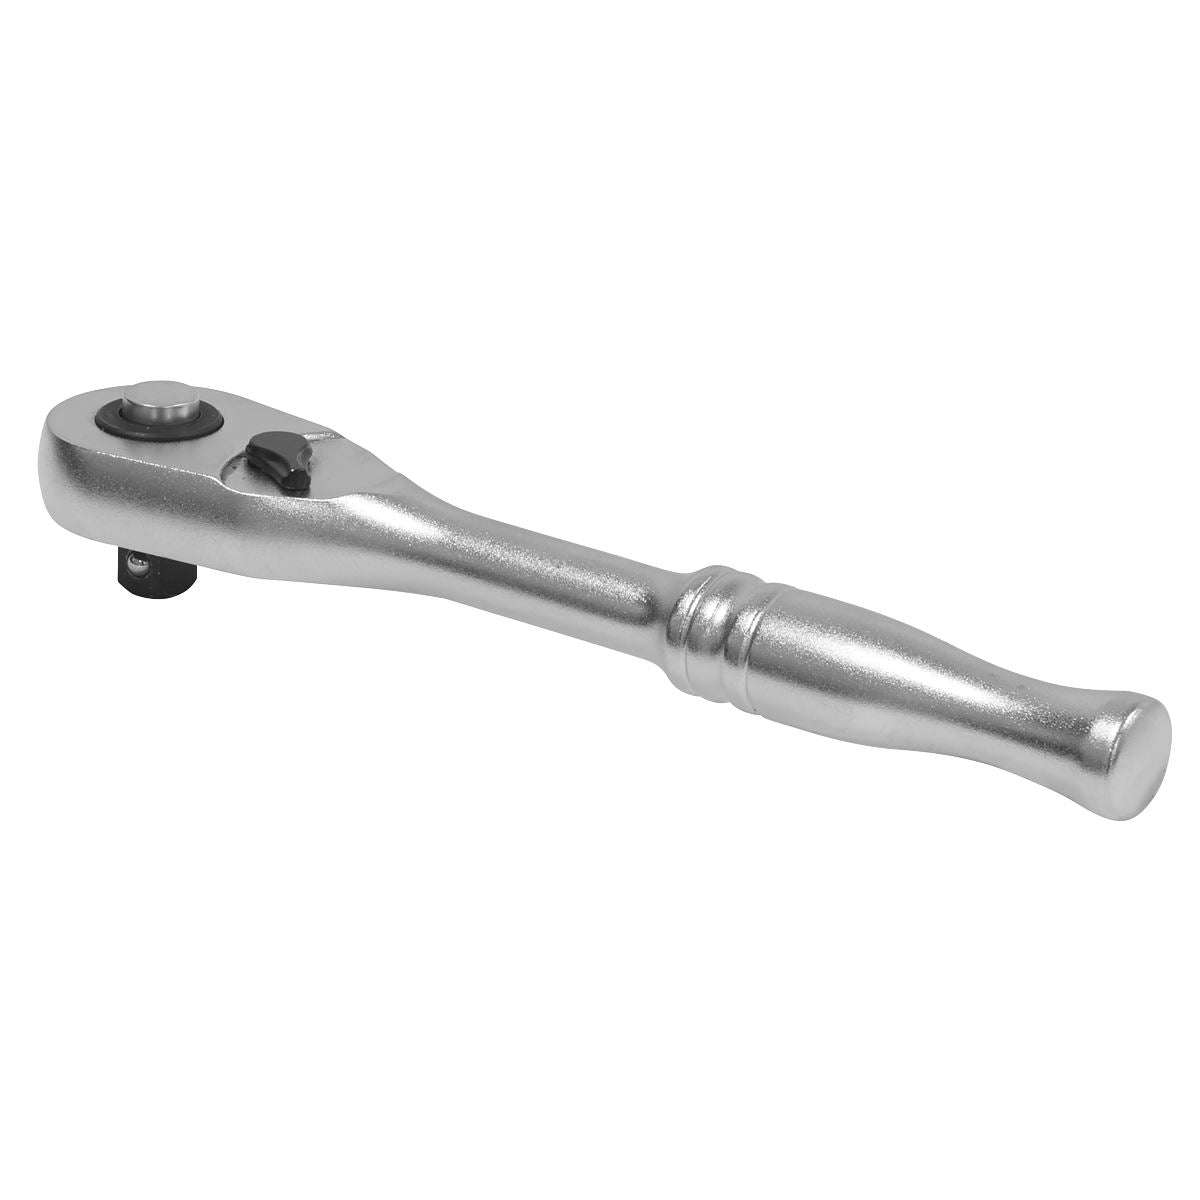 Sealey Premier Ratchet Wrench 1/4"Sq Drive 90-Tooth Flip Reverse - Premier Platinum Series